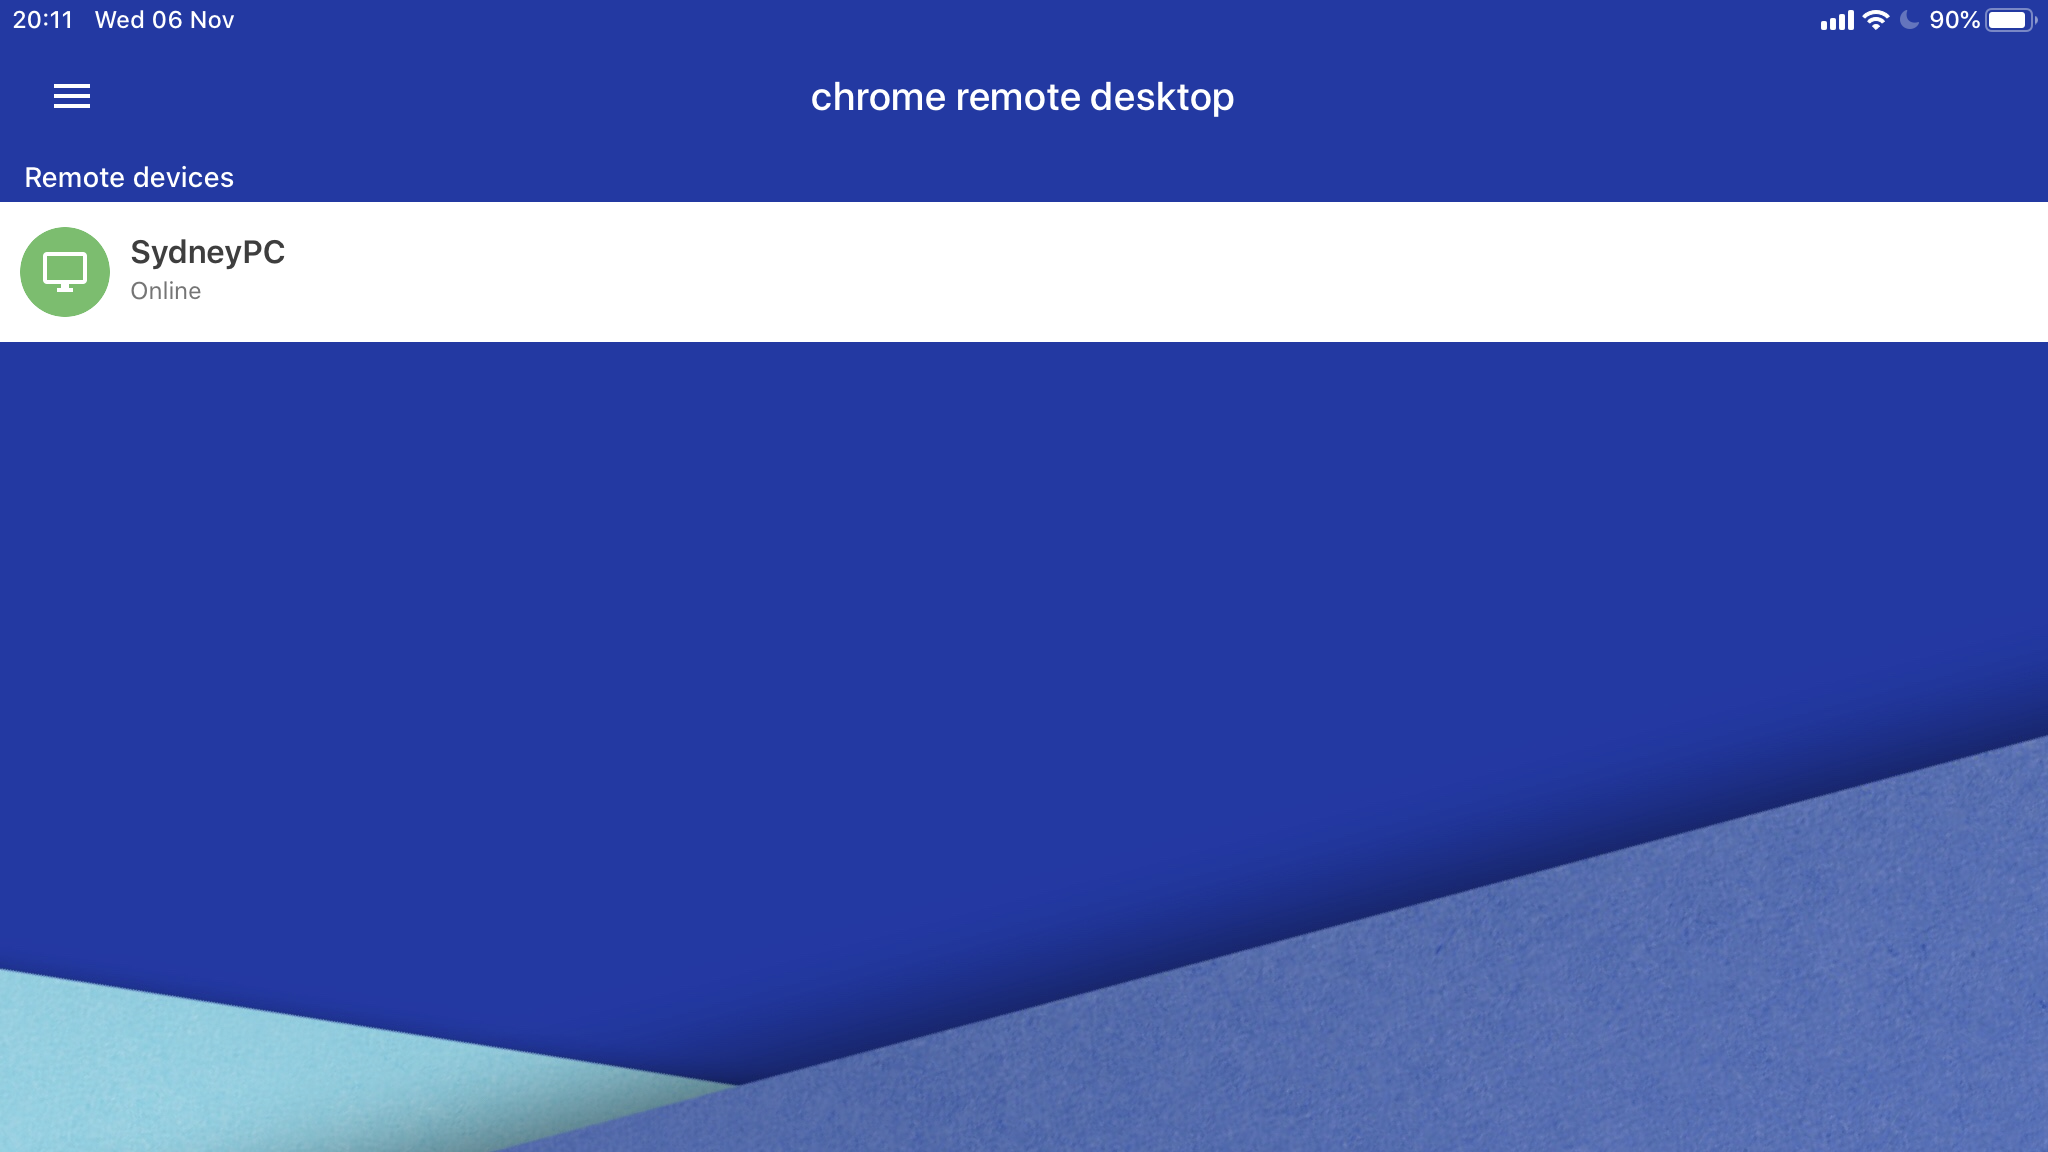 chrome remote desktop ipad pro 2019